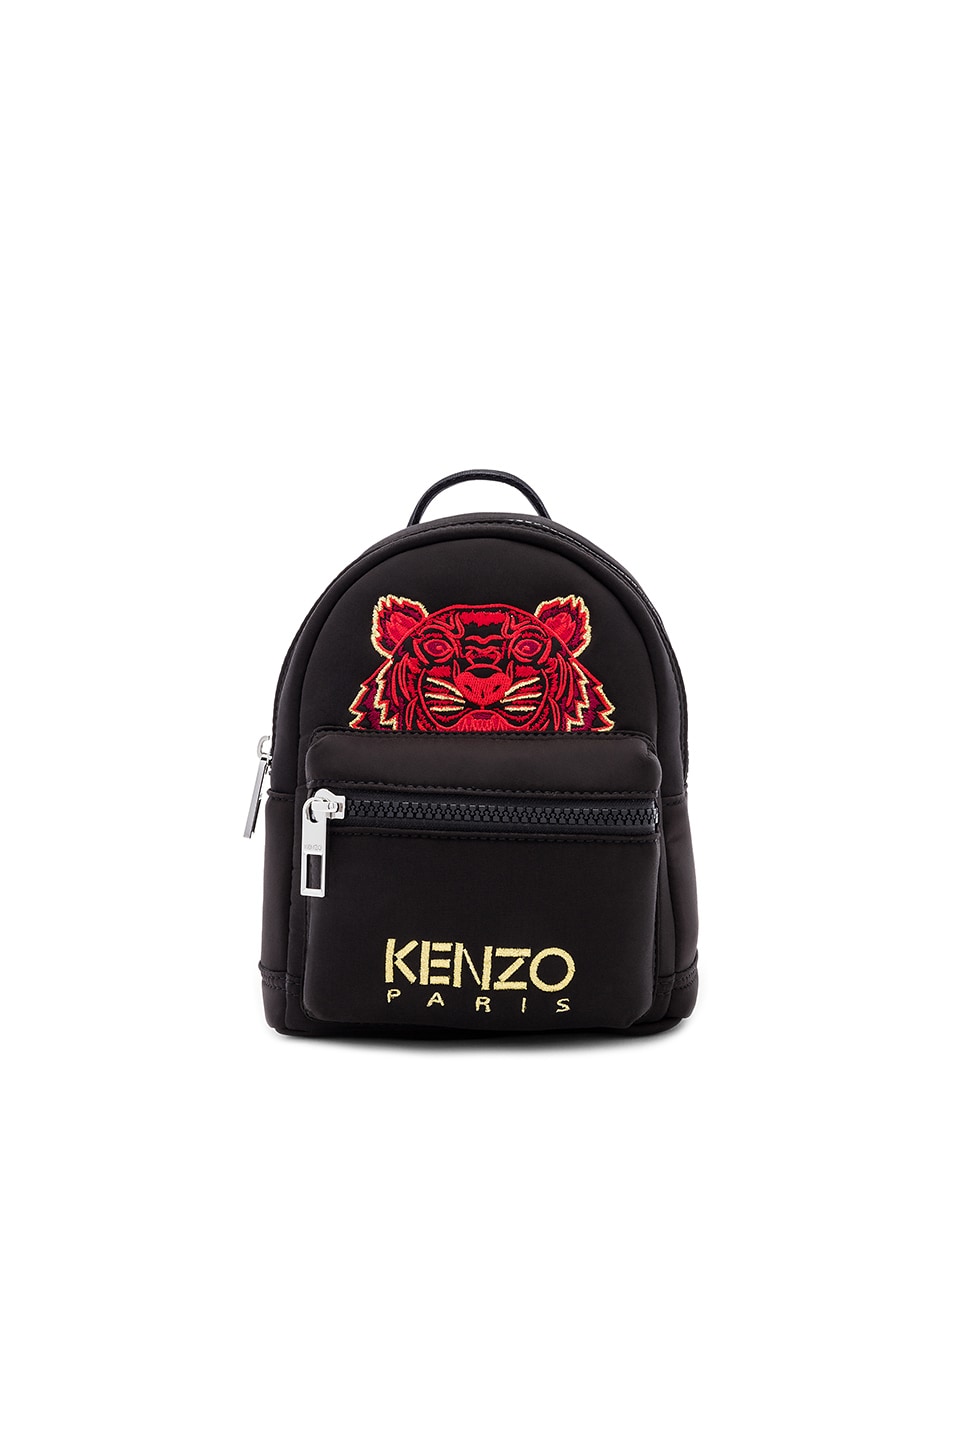 kenzo tiger mini backpack - 58% remise 